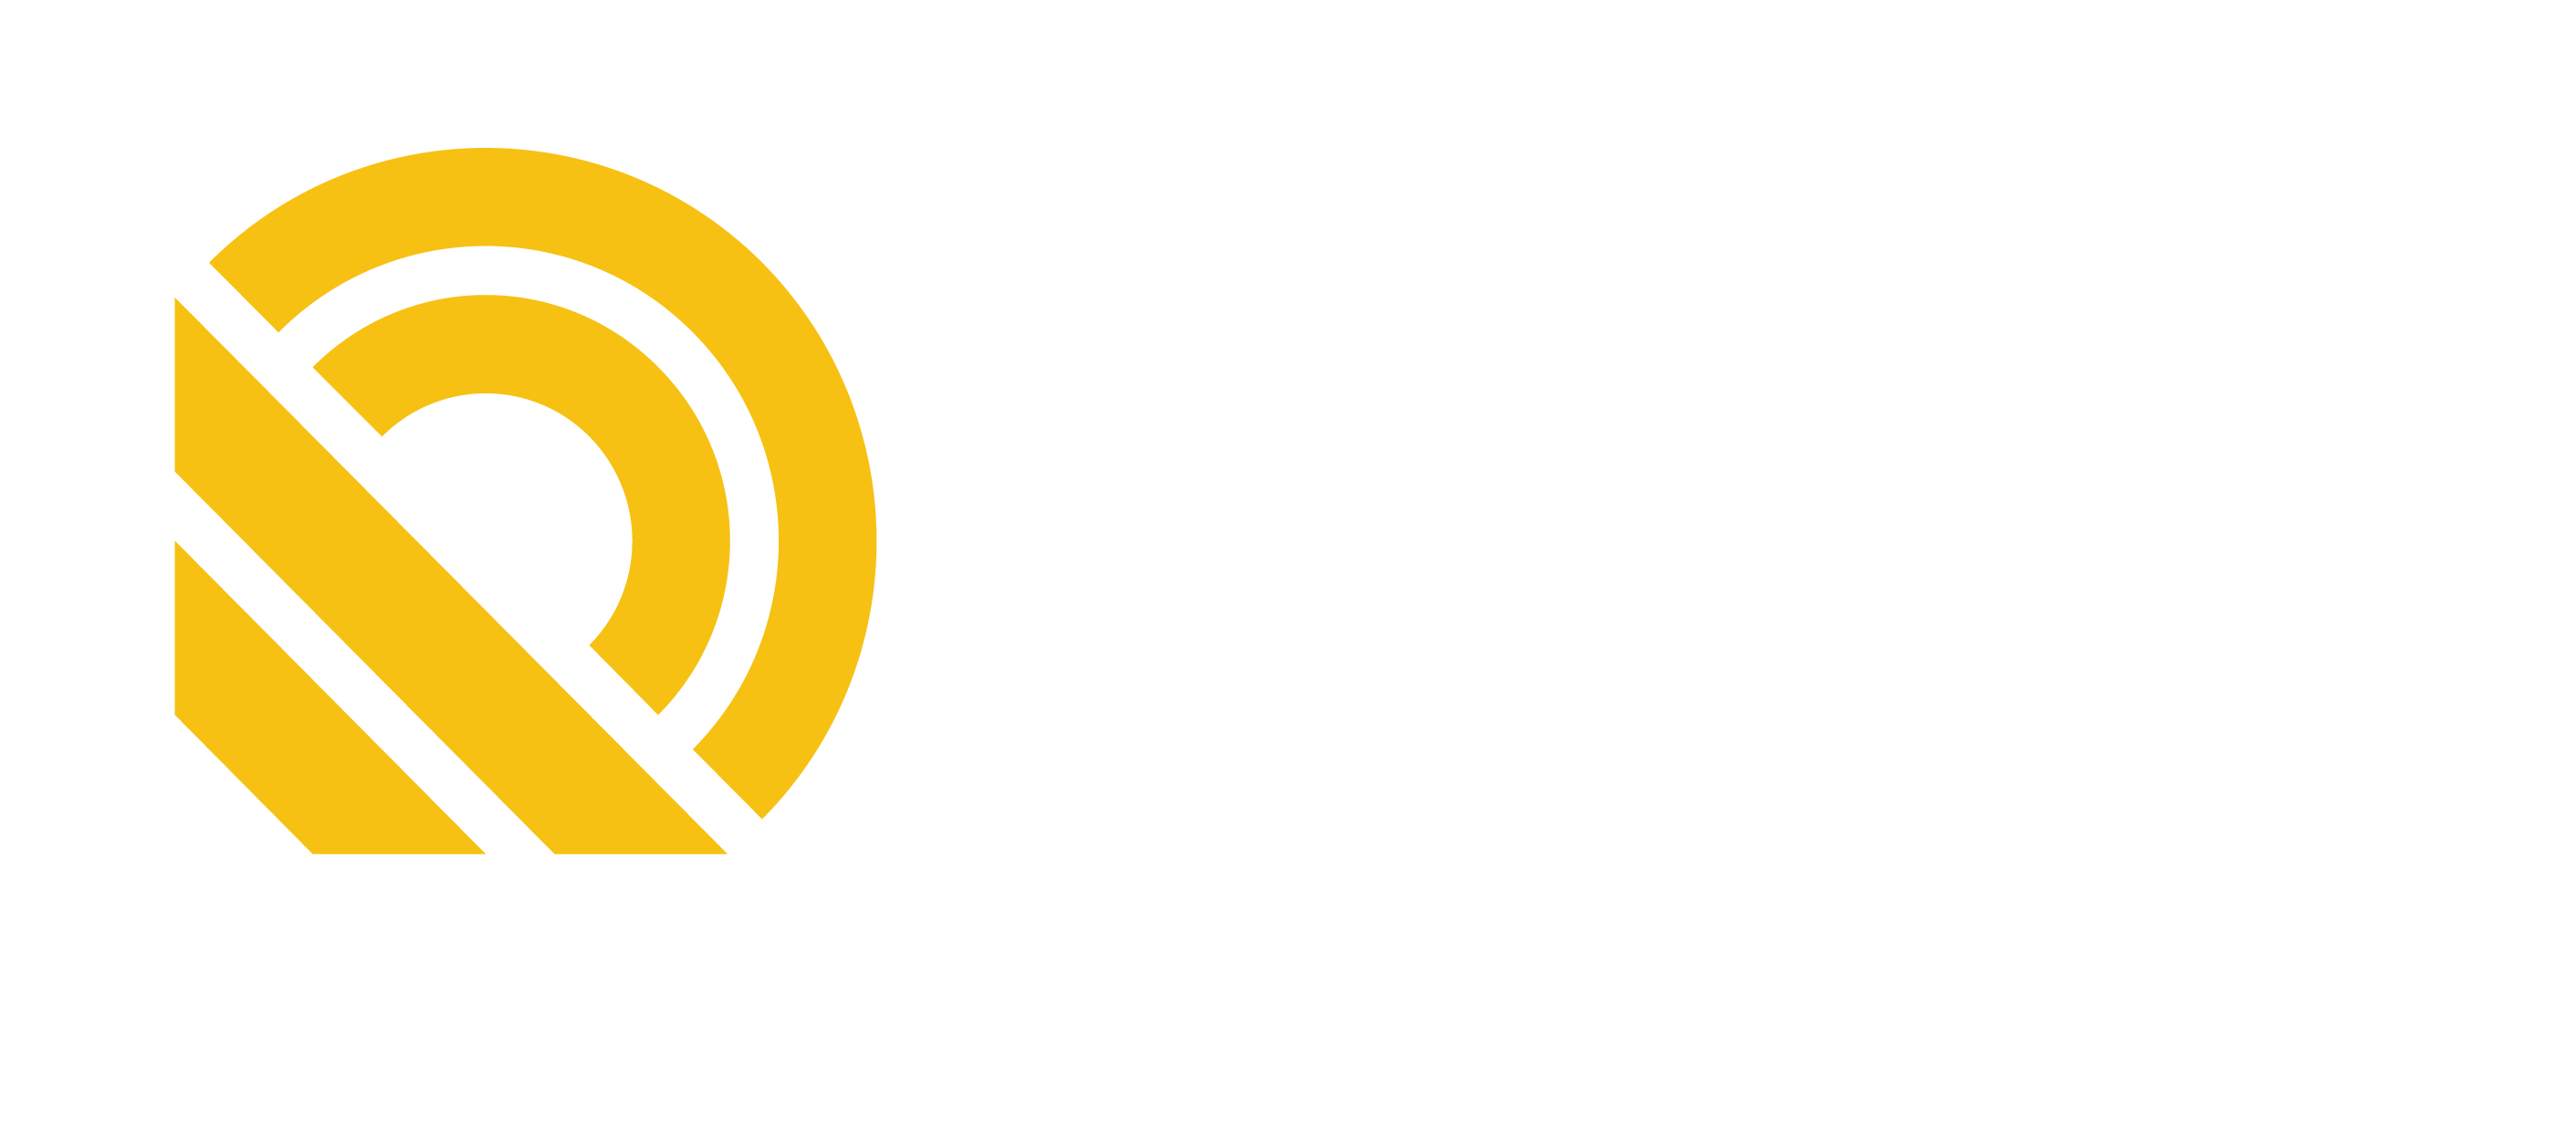 96.5 Radio Bahrain - We Play The Hits!